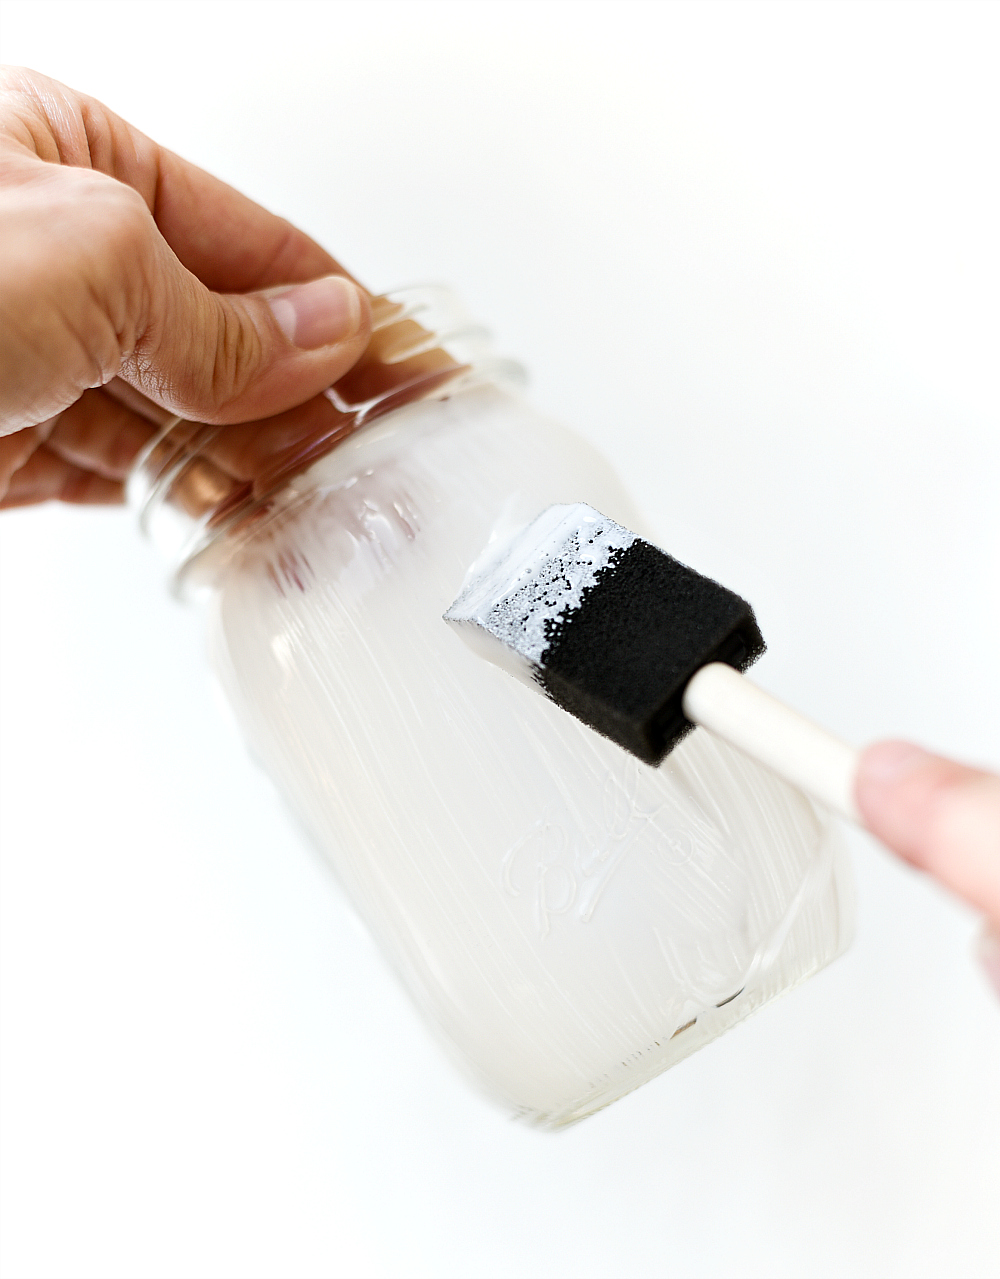 How To Make Epsom Salt Mason Jar Snow Votives